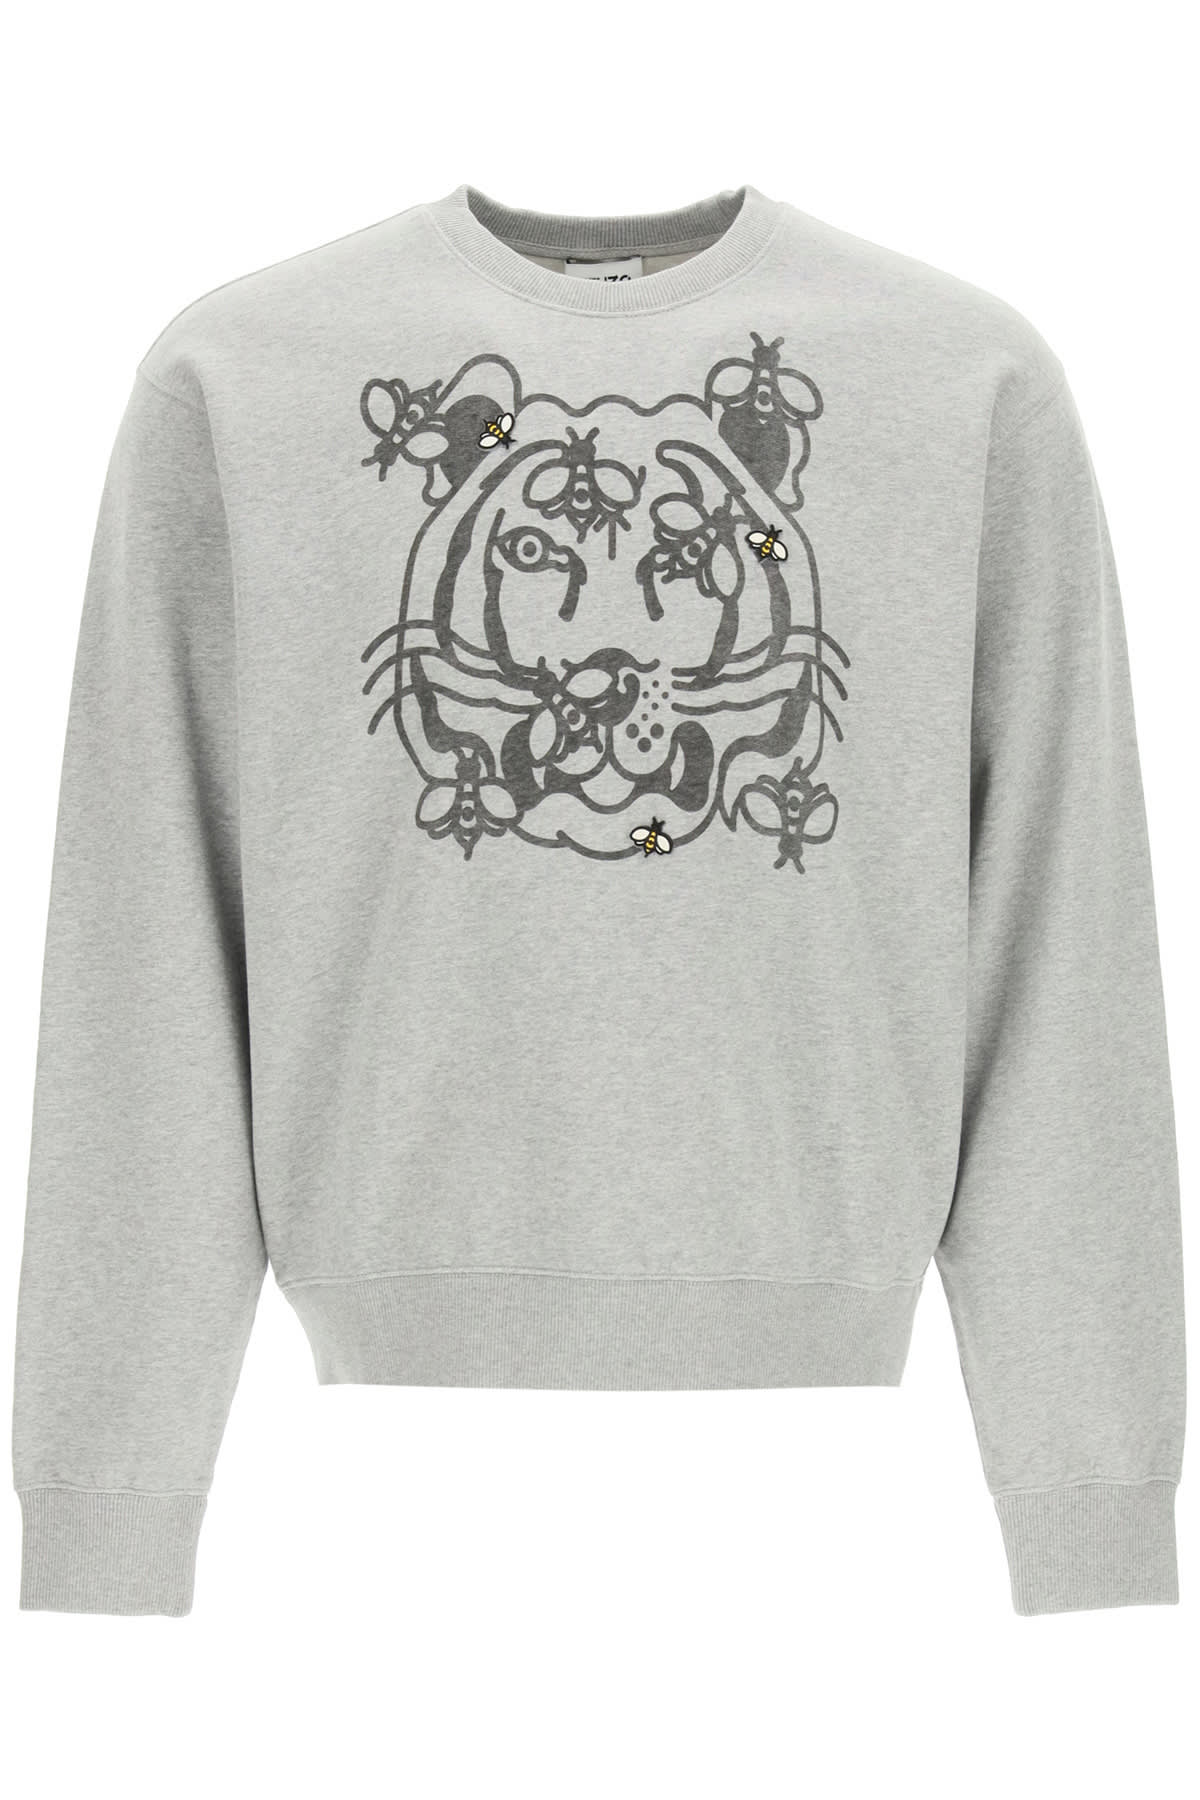 Kenzo Bee A Tiger Print Sweatshirt